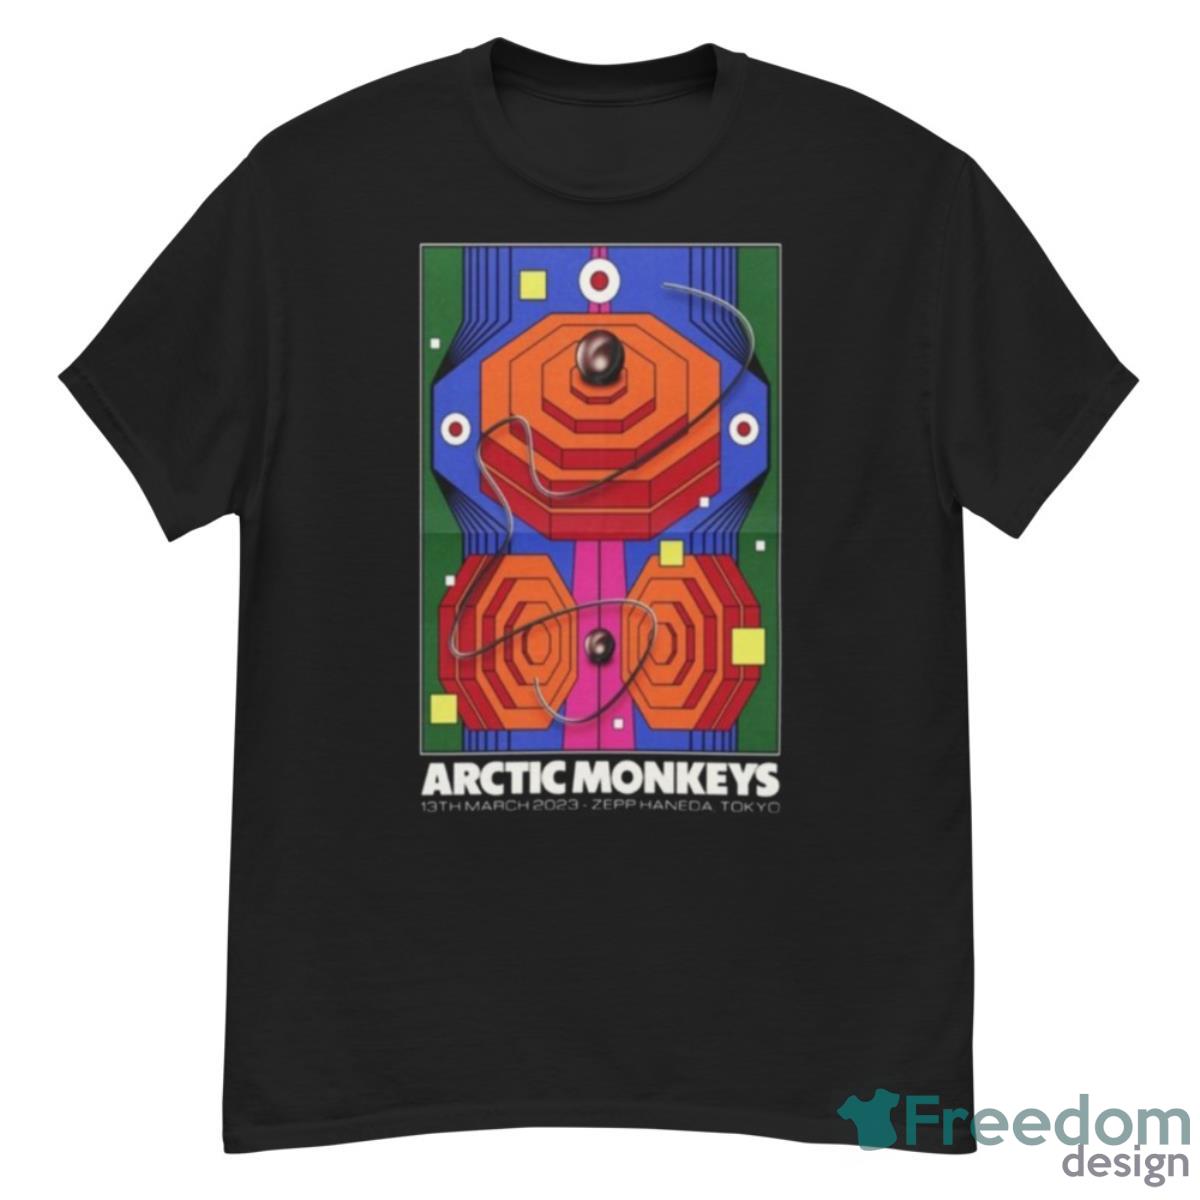 Arctic Monkeys March 13Th 2023 Zepp Haneda Tokyo Shirt - G500 Men’s Classic T-Shirt